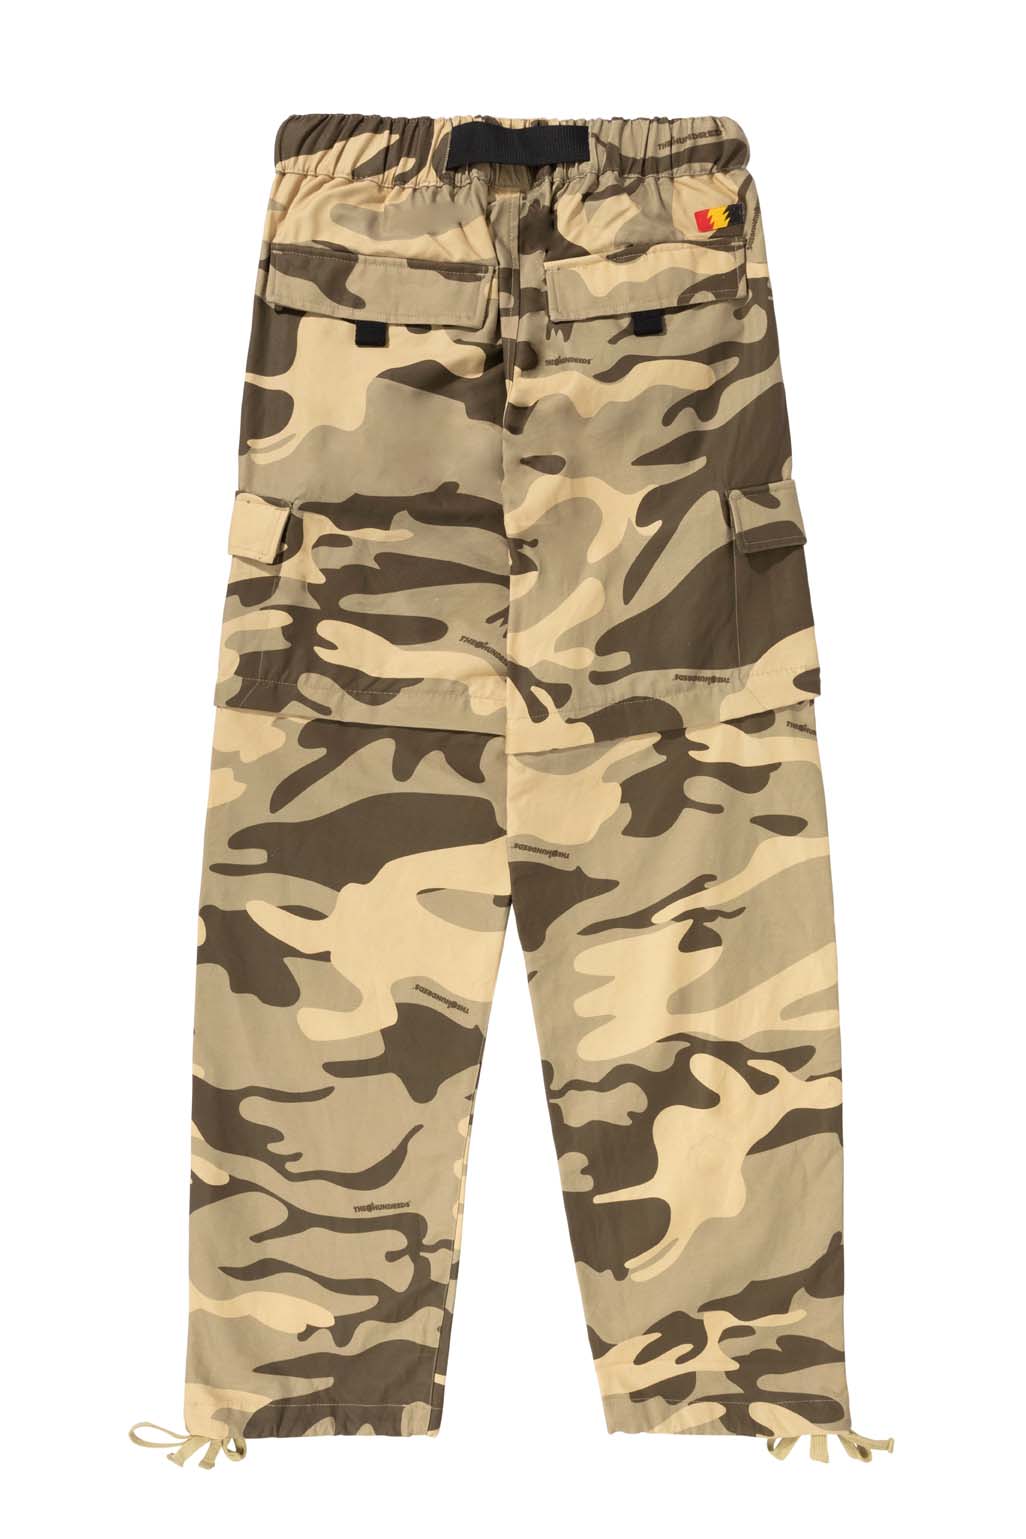 Camp Convertible Shorts/Pants - Camo